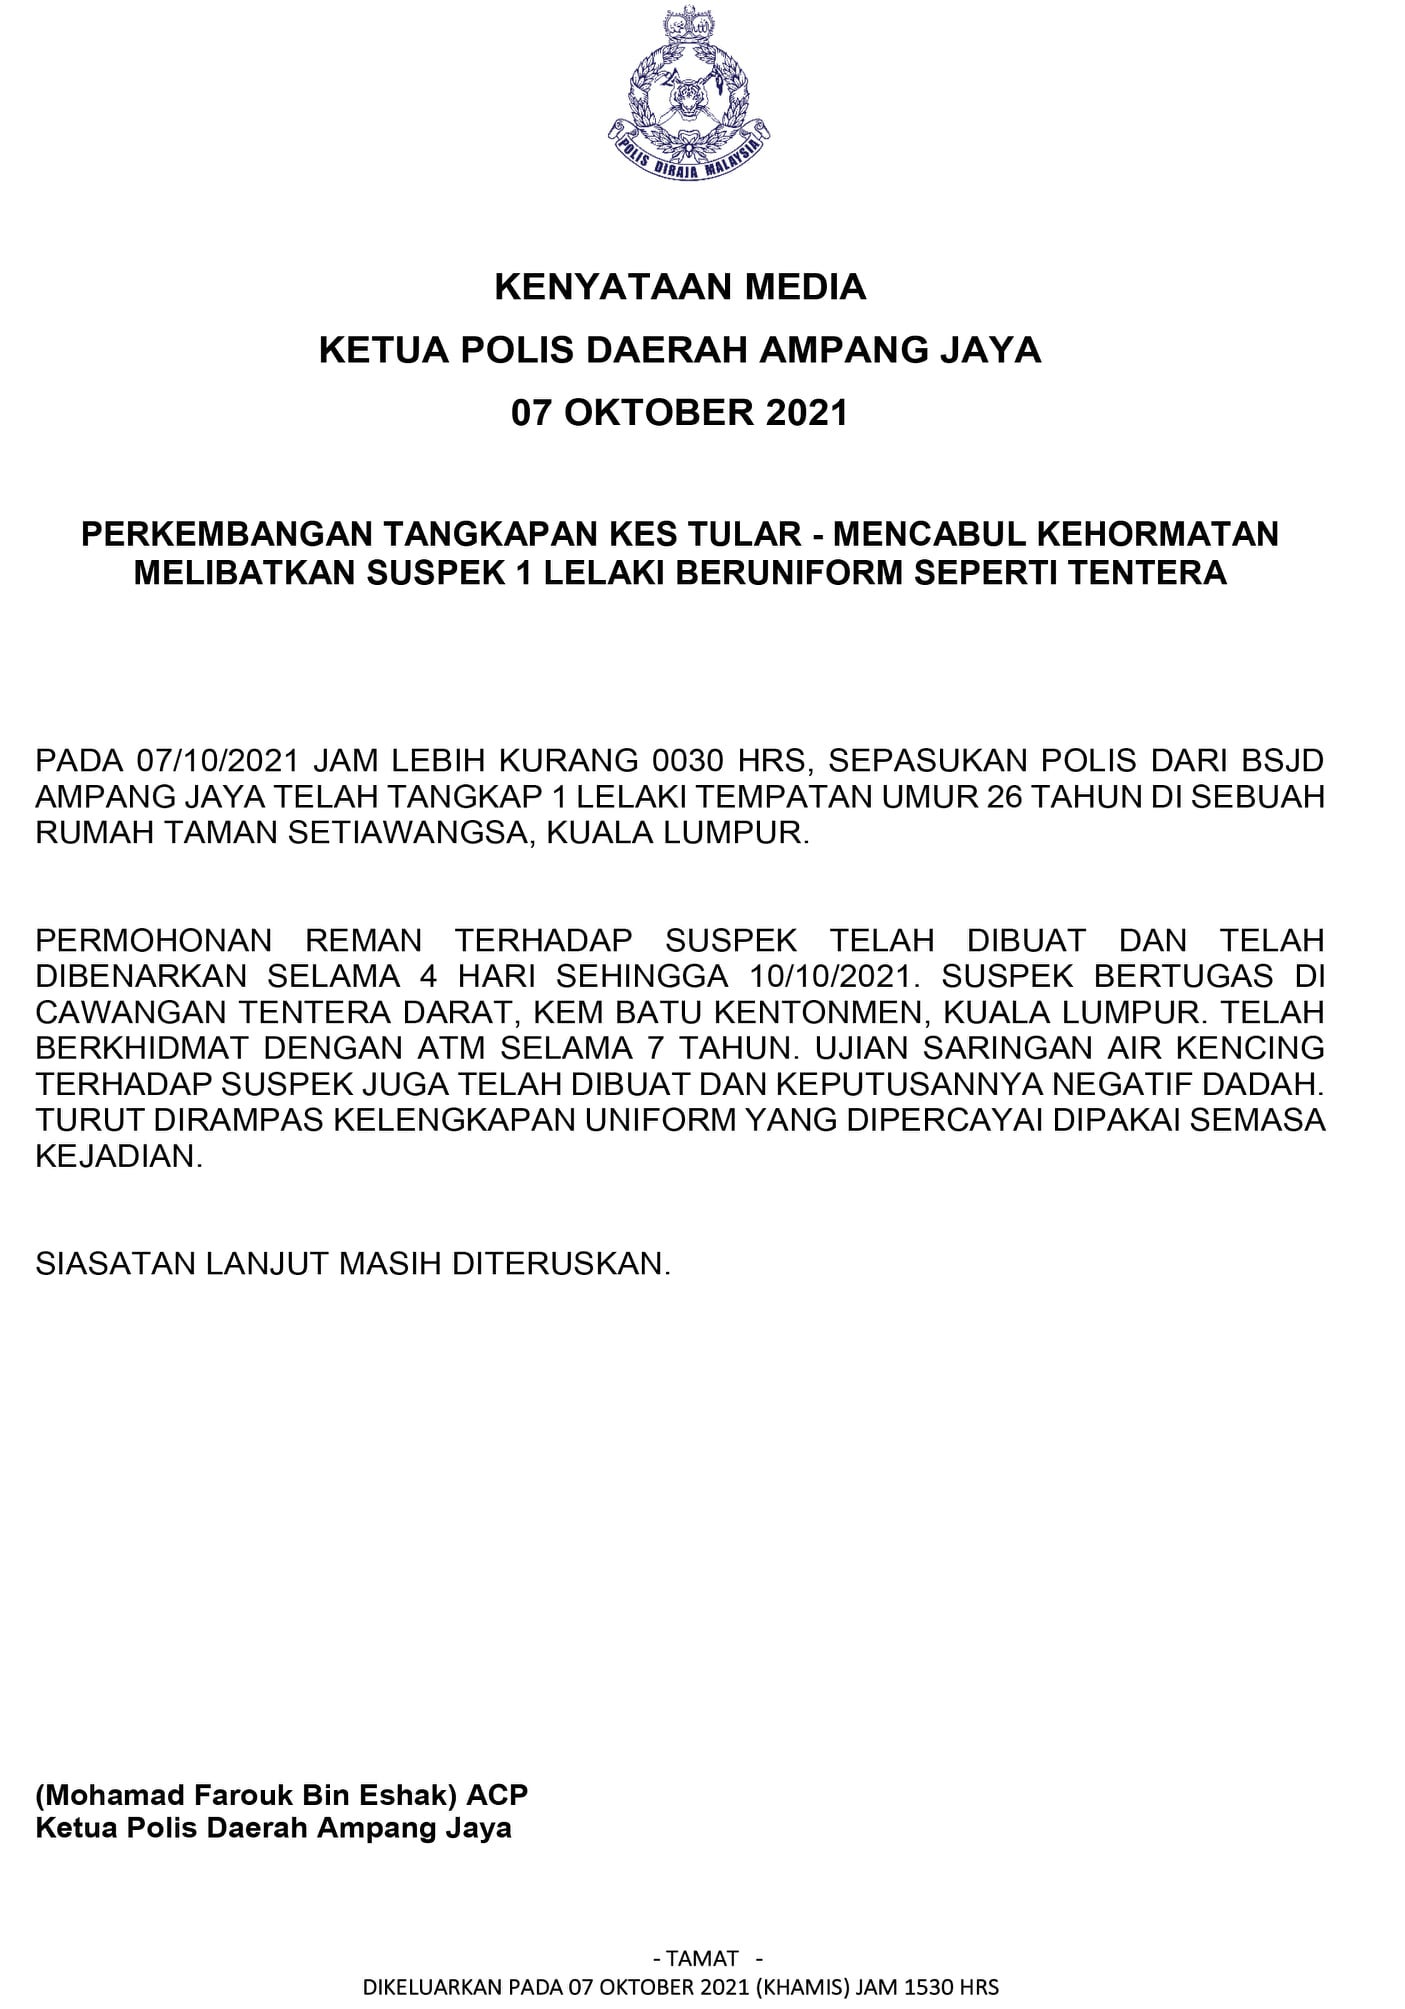 police statement